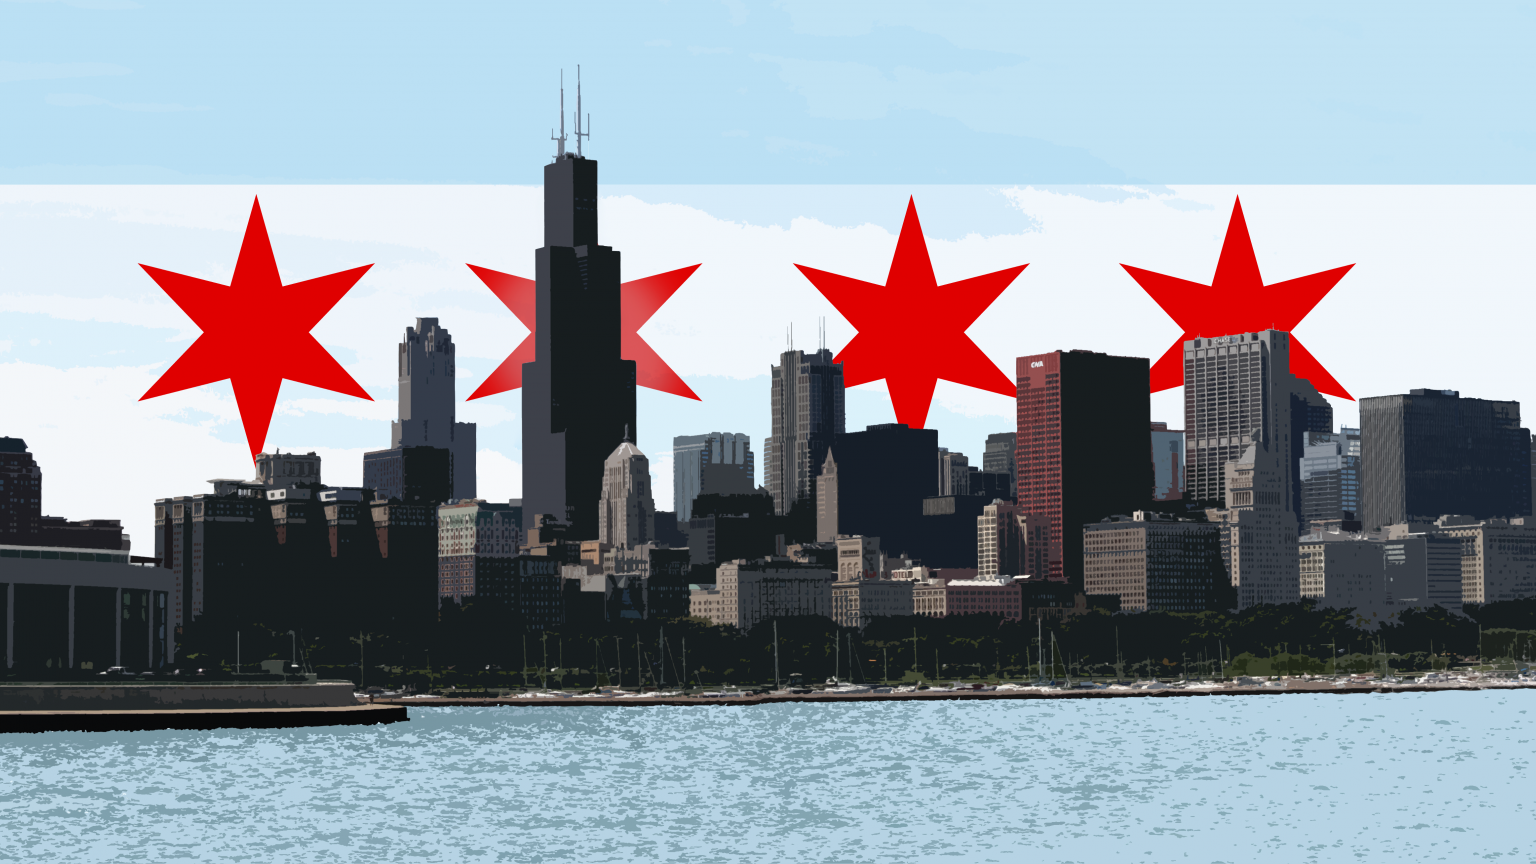 Free download ChicagoSkyline Full Flag [4775x2613] for your Desktop, Mobile & Tablet. Explore Chicago Flag Wallpaper. Chicago Sports Wallpaper, Wallpaper Chicago, Flag Background Wallpaper